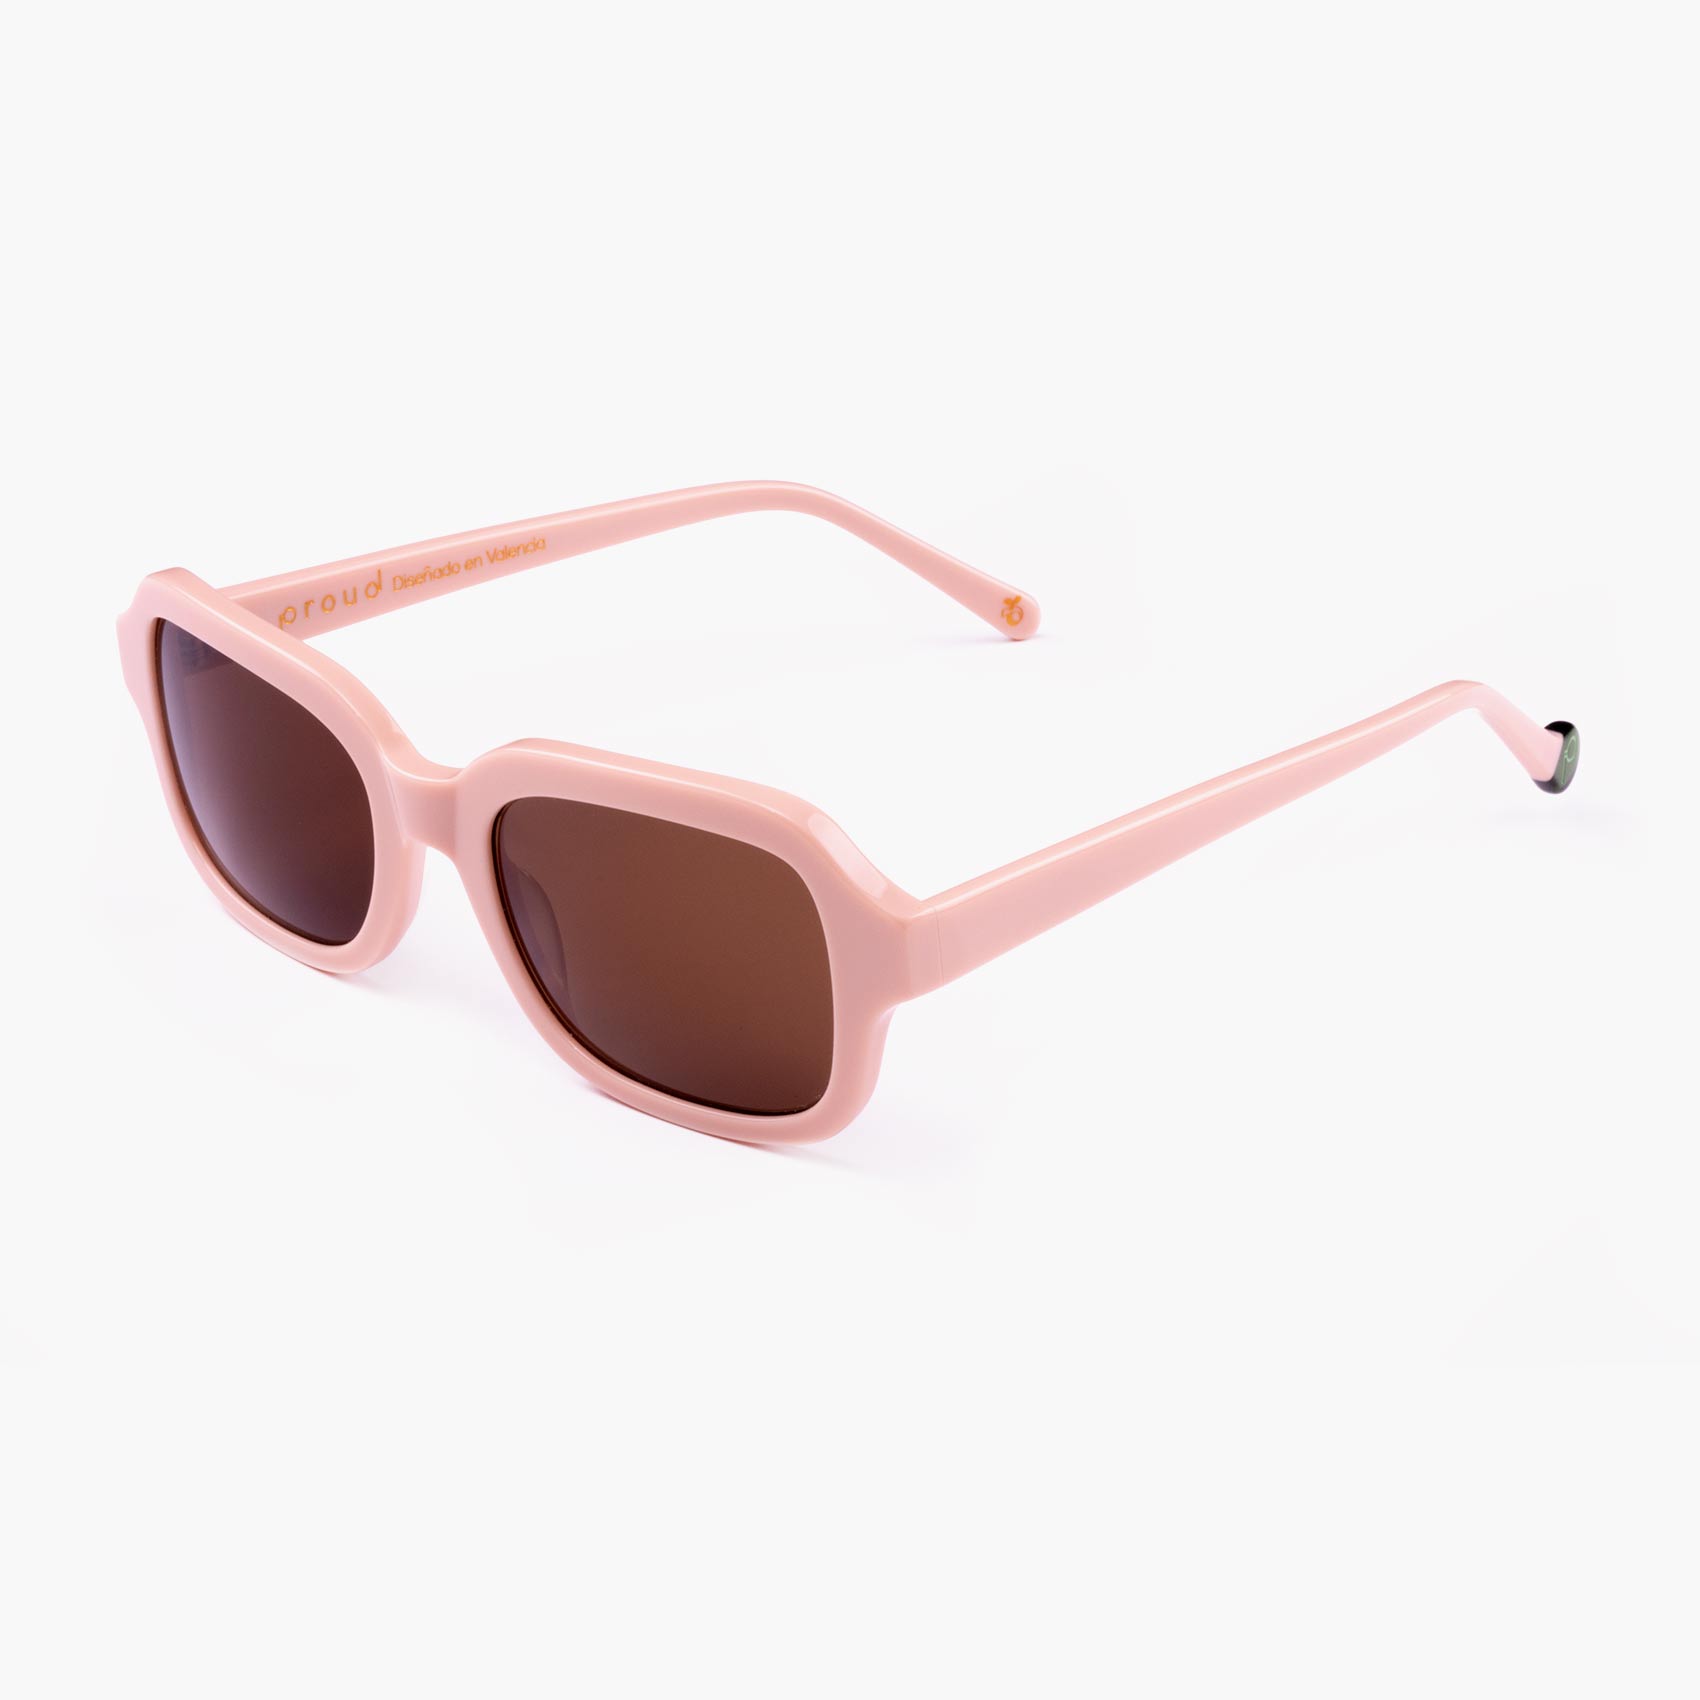 Lentes de sol amplias en gafa para mujer modelo Ruzafa • Proud Eyewear